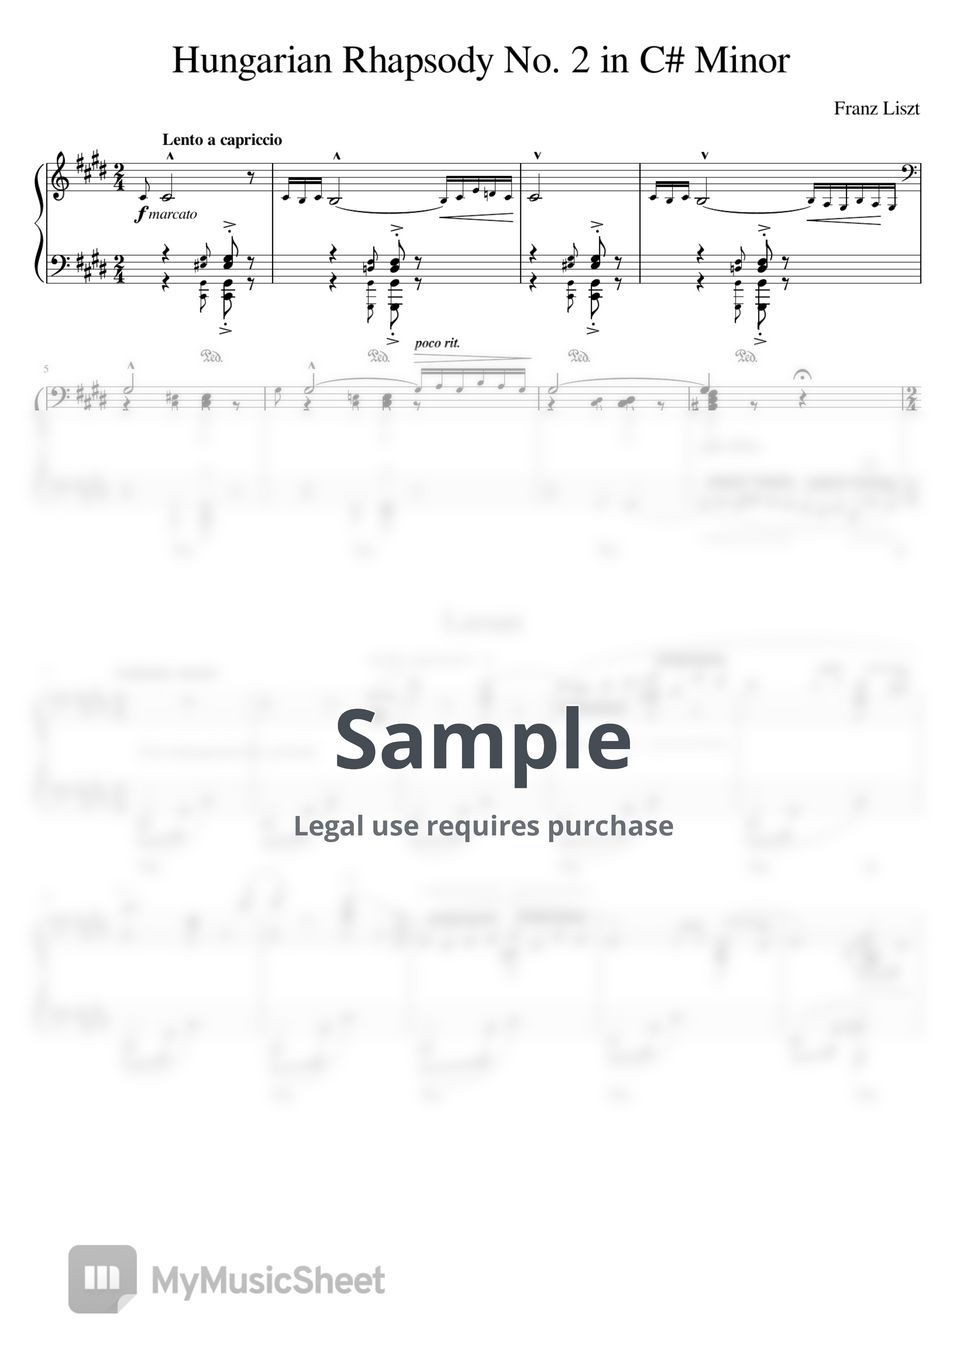 Franz Liszt - Hungarian Rhapsody nº 2 by Piano Tutorial Score